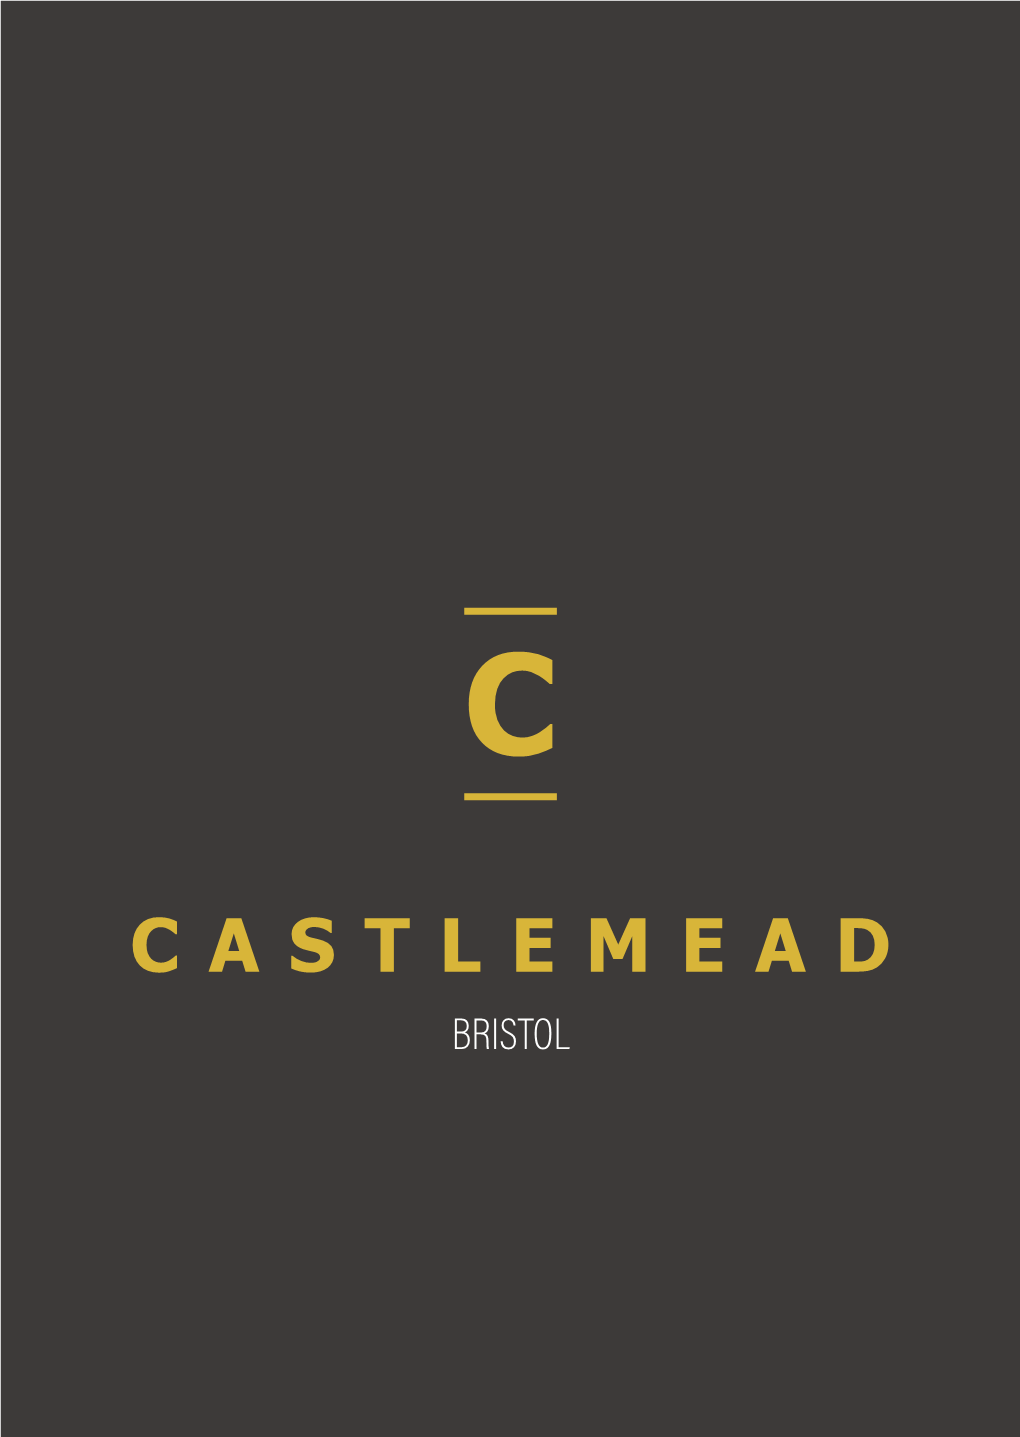 Castlemead Bristol a New Benchmark in Bristol